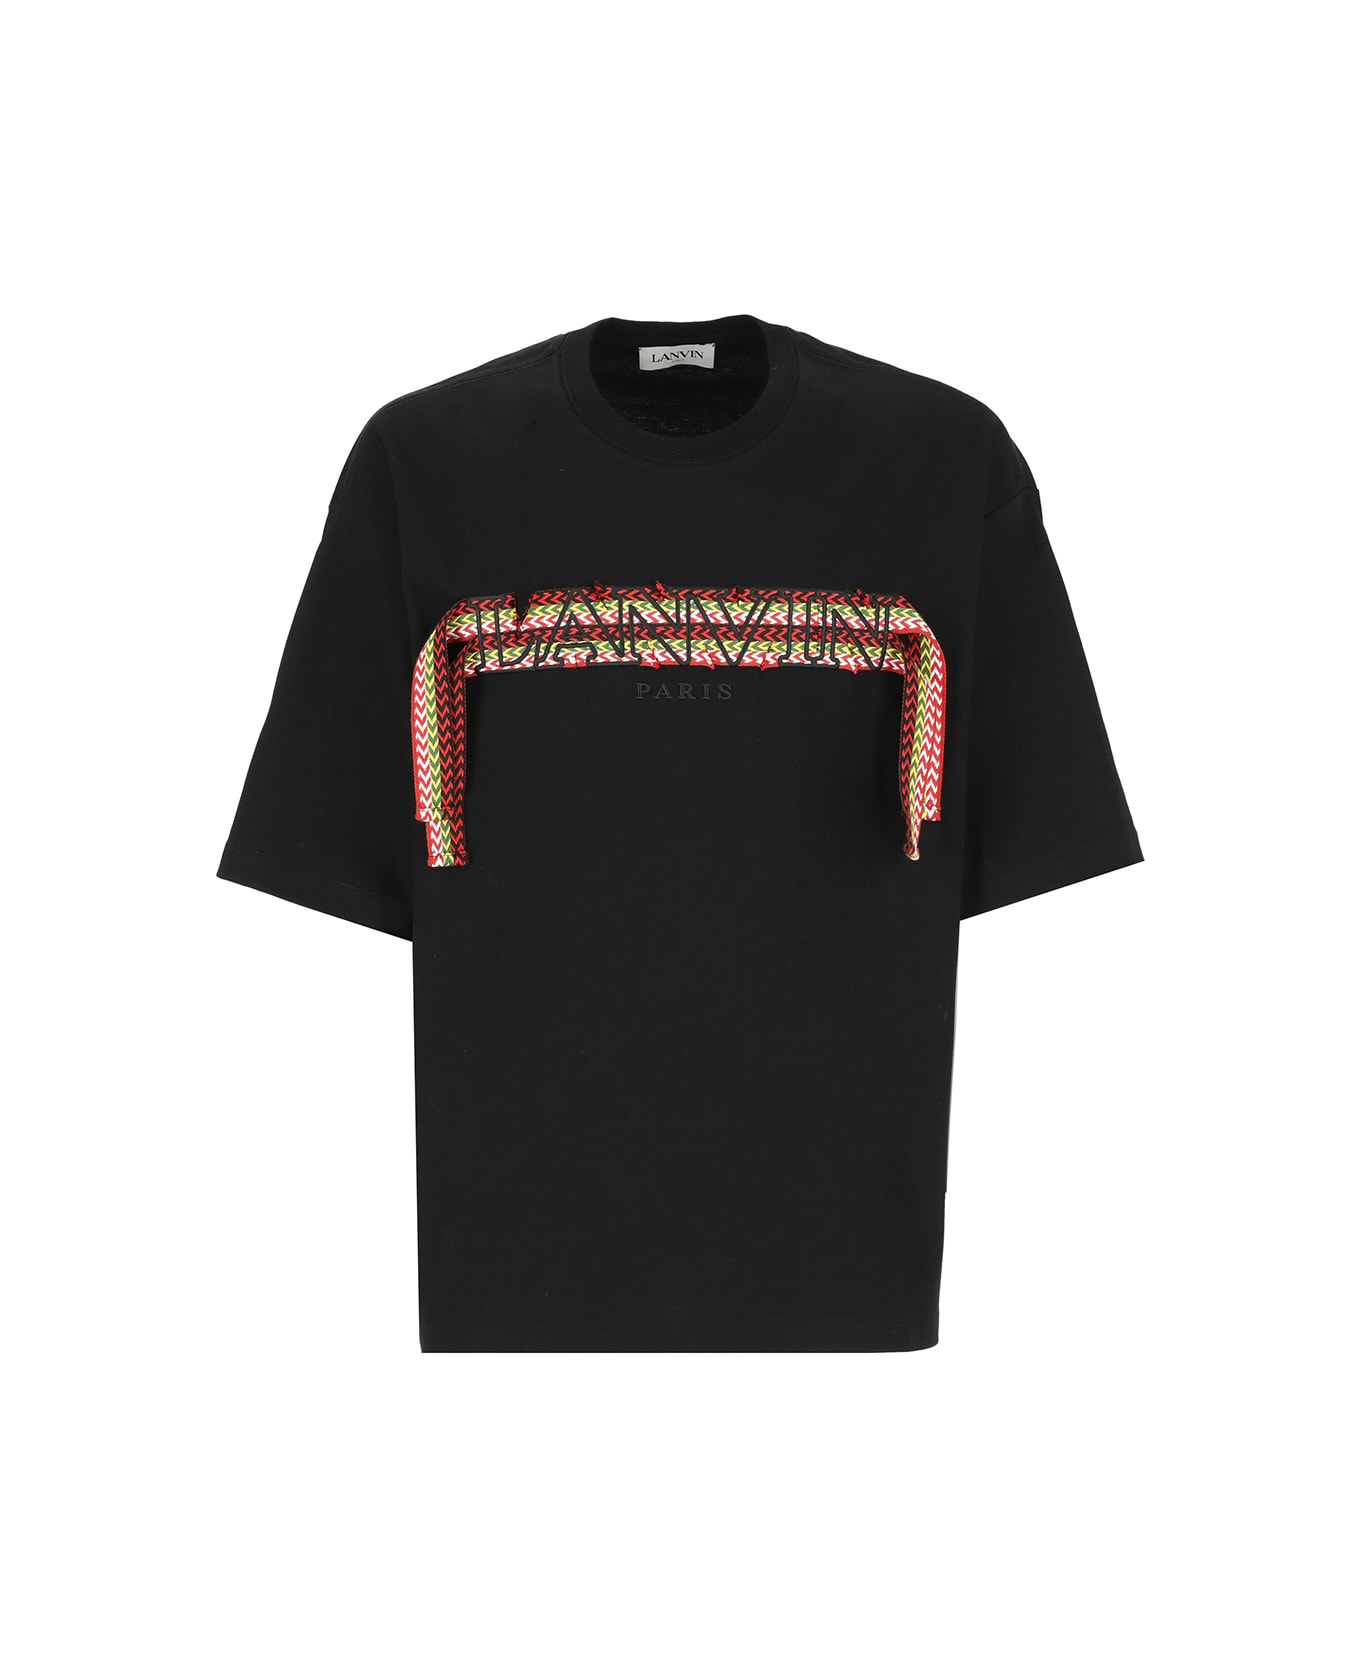 Lanvin Curb T-shirt - Black